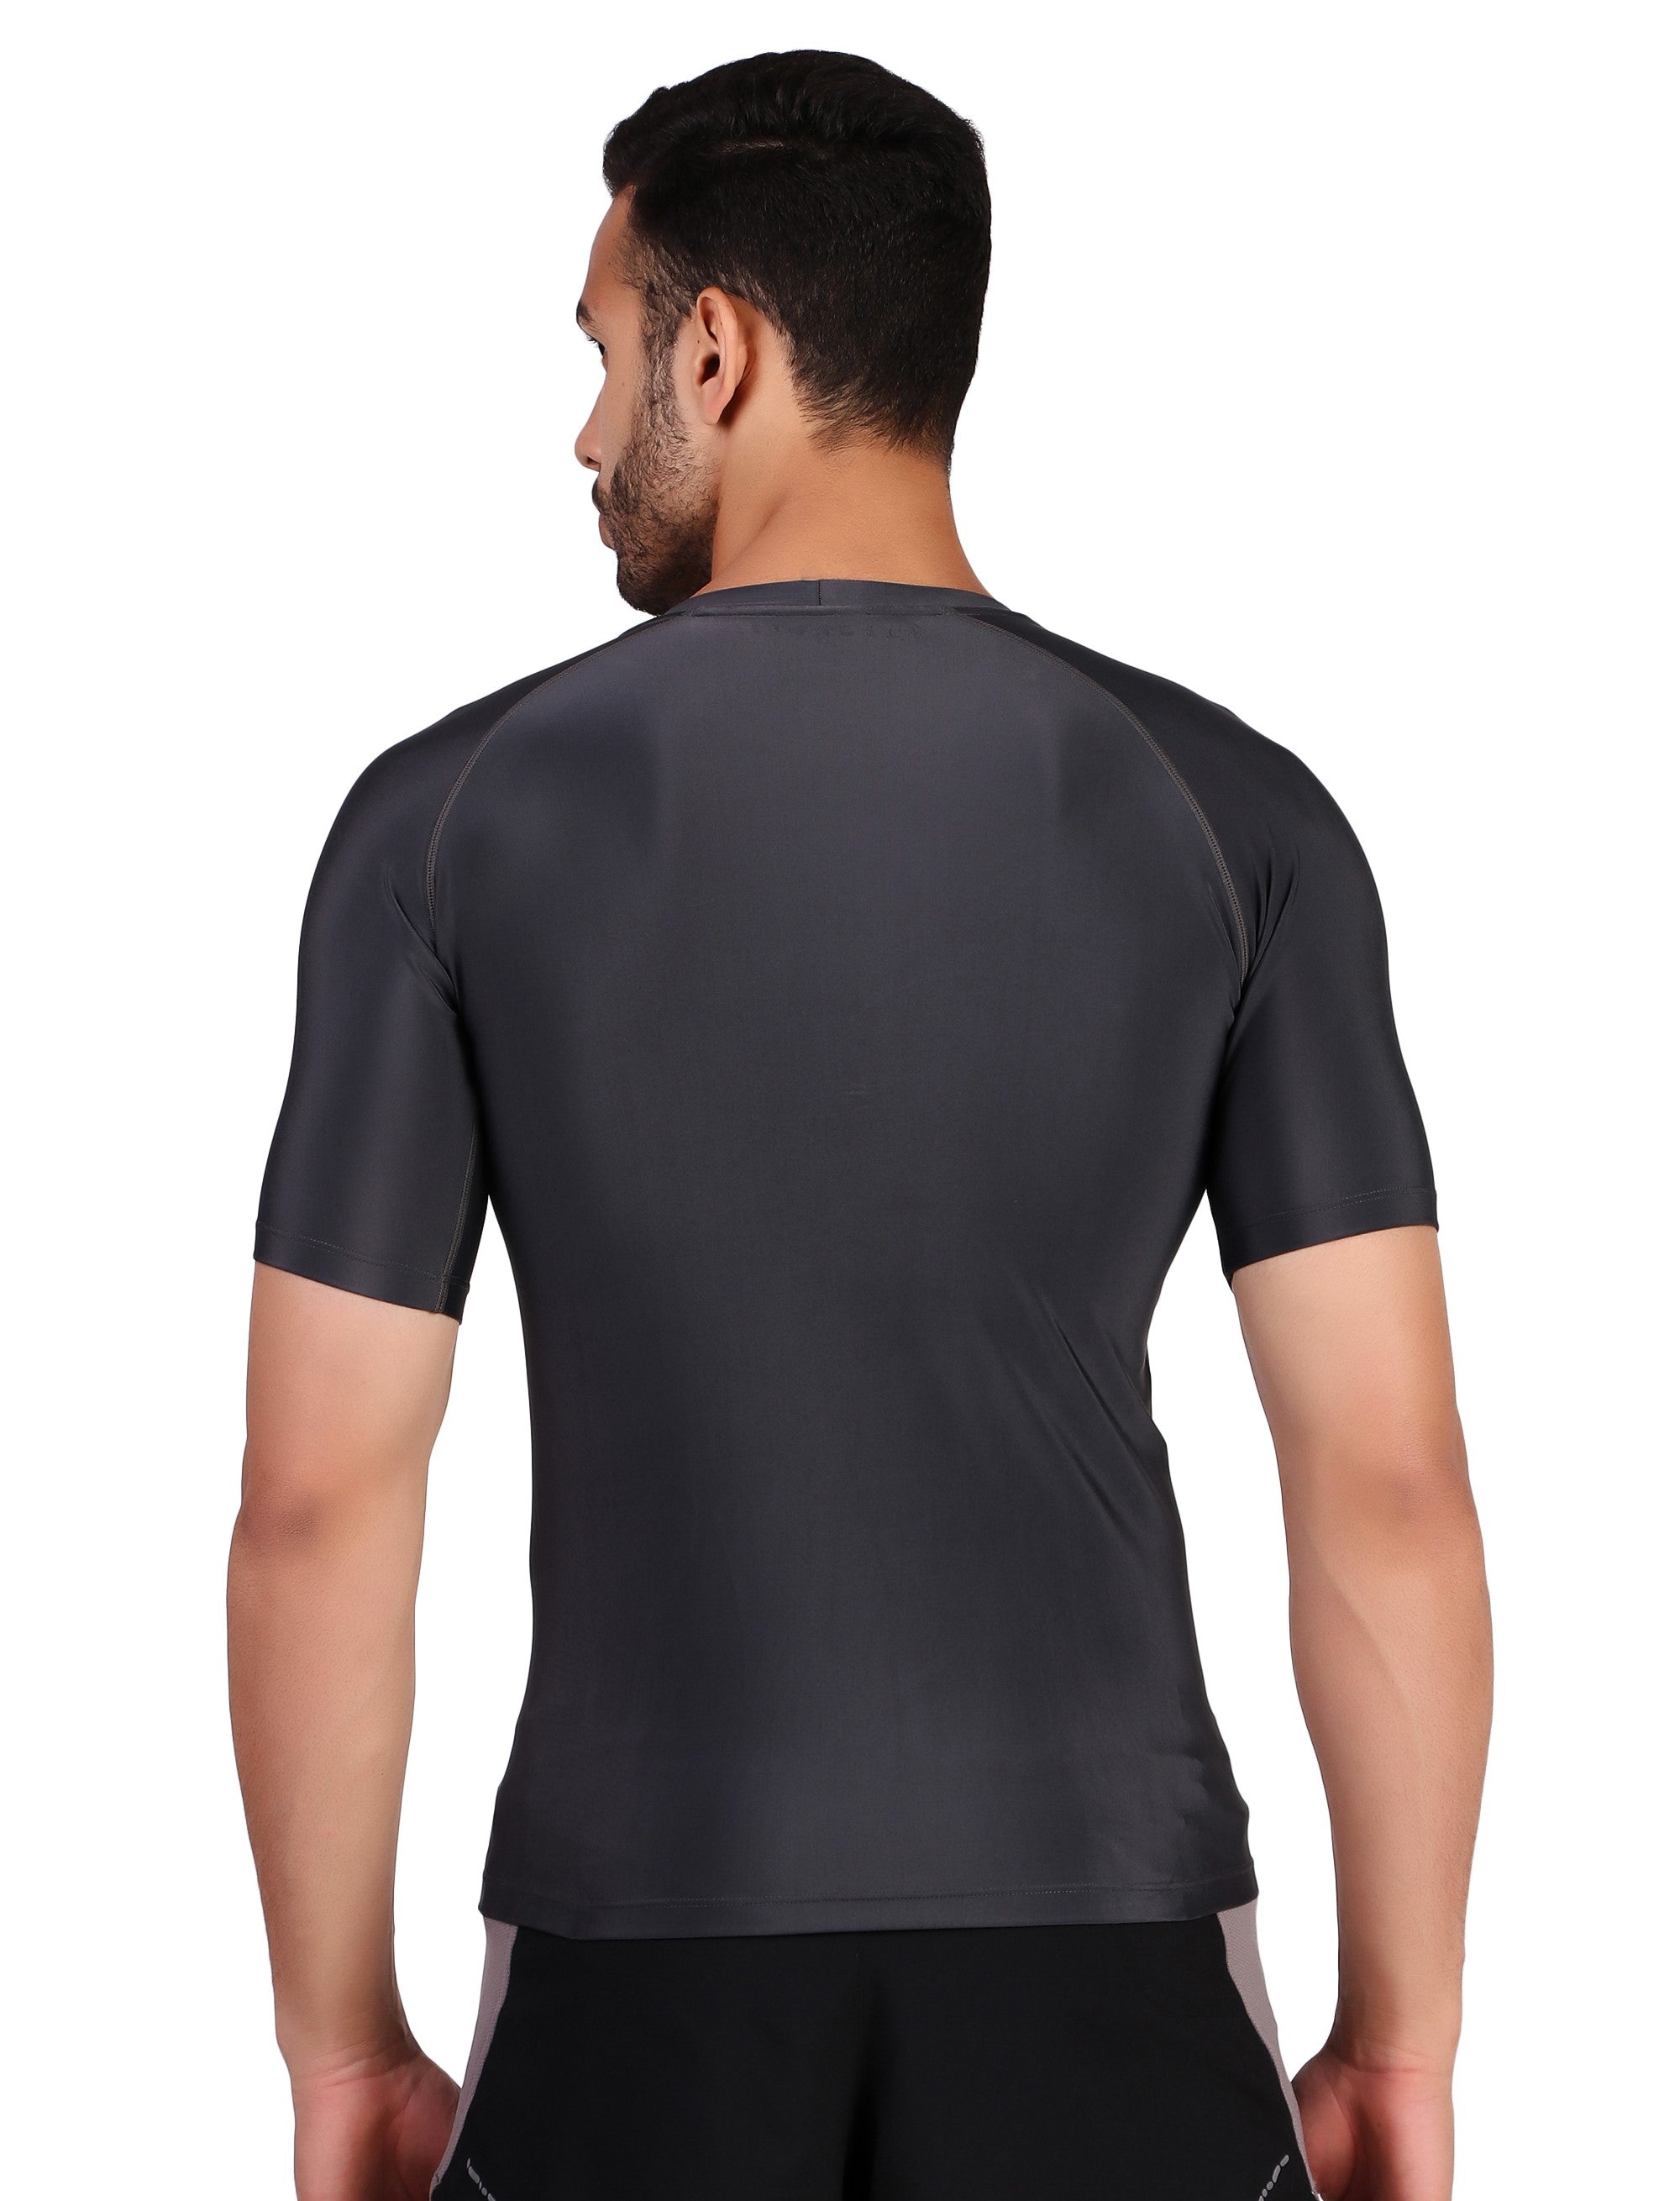 Men's Polyester Compression Tshirt Half Sleeve (Dark Grey)